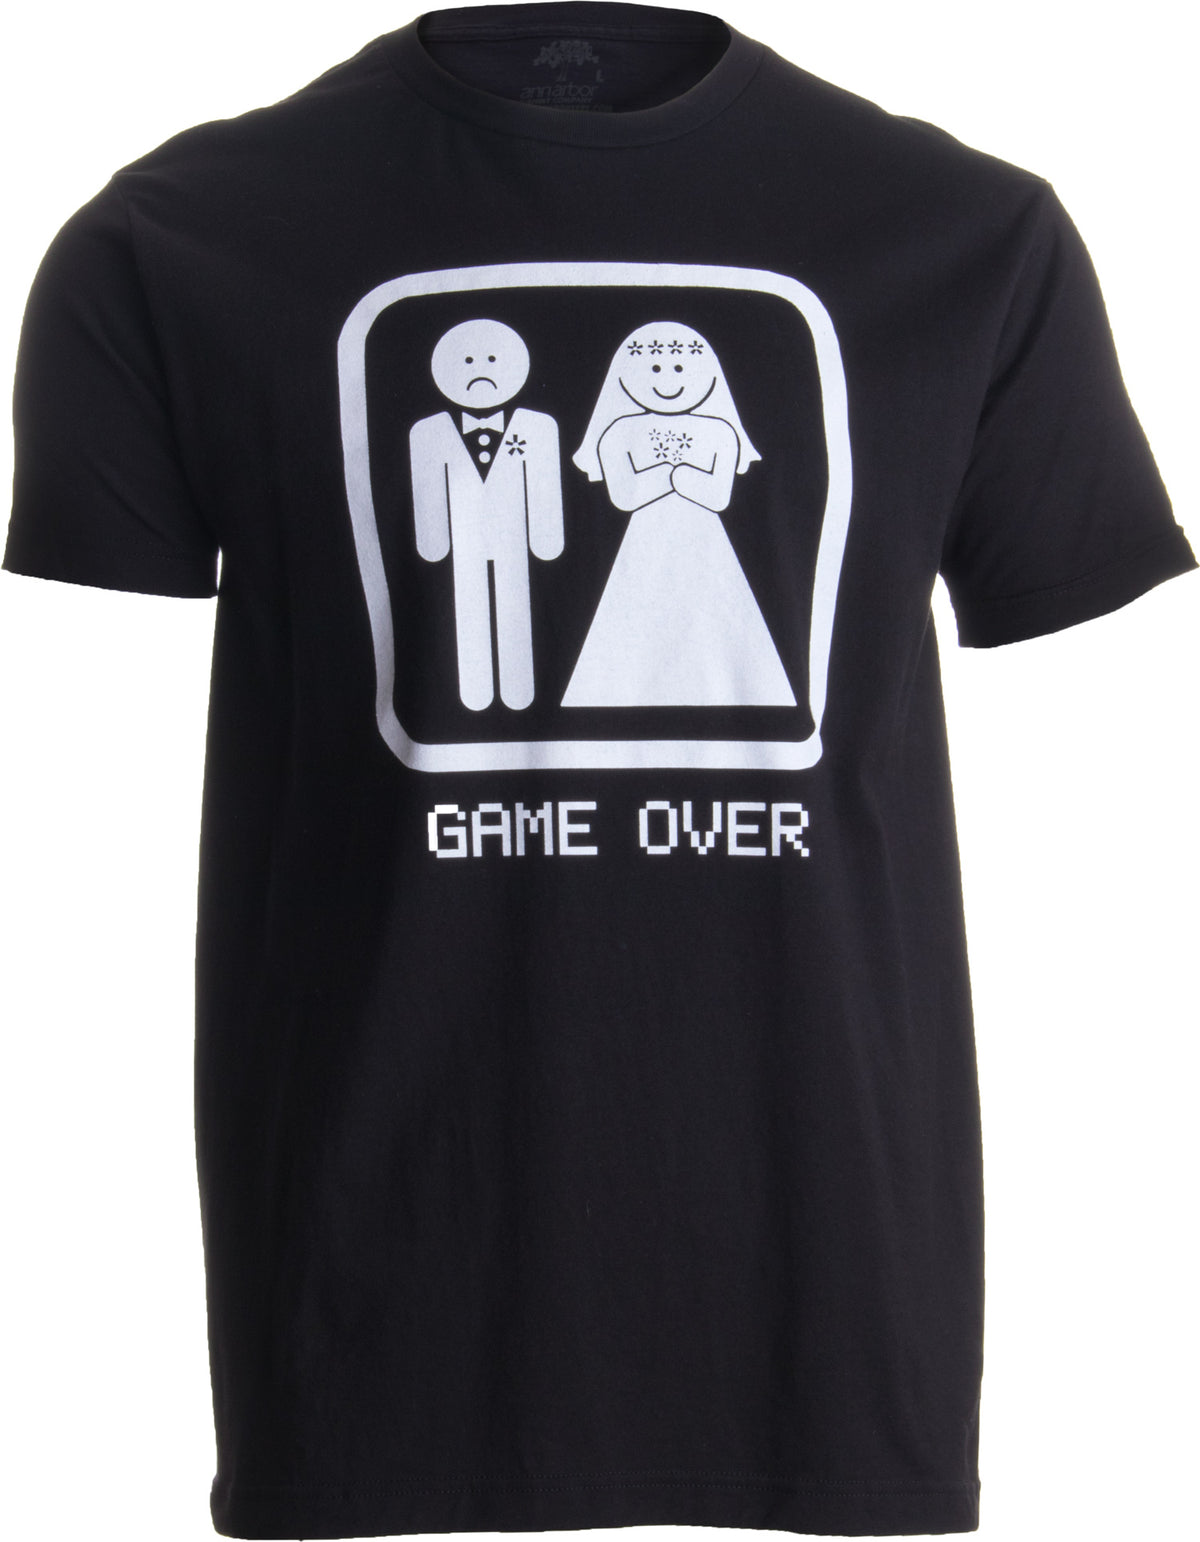 GAME OVER | Funny Bachelor Party, Wedding Groomsman Humor Unisex T-shirt